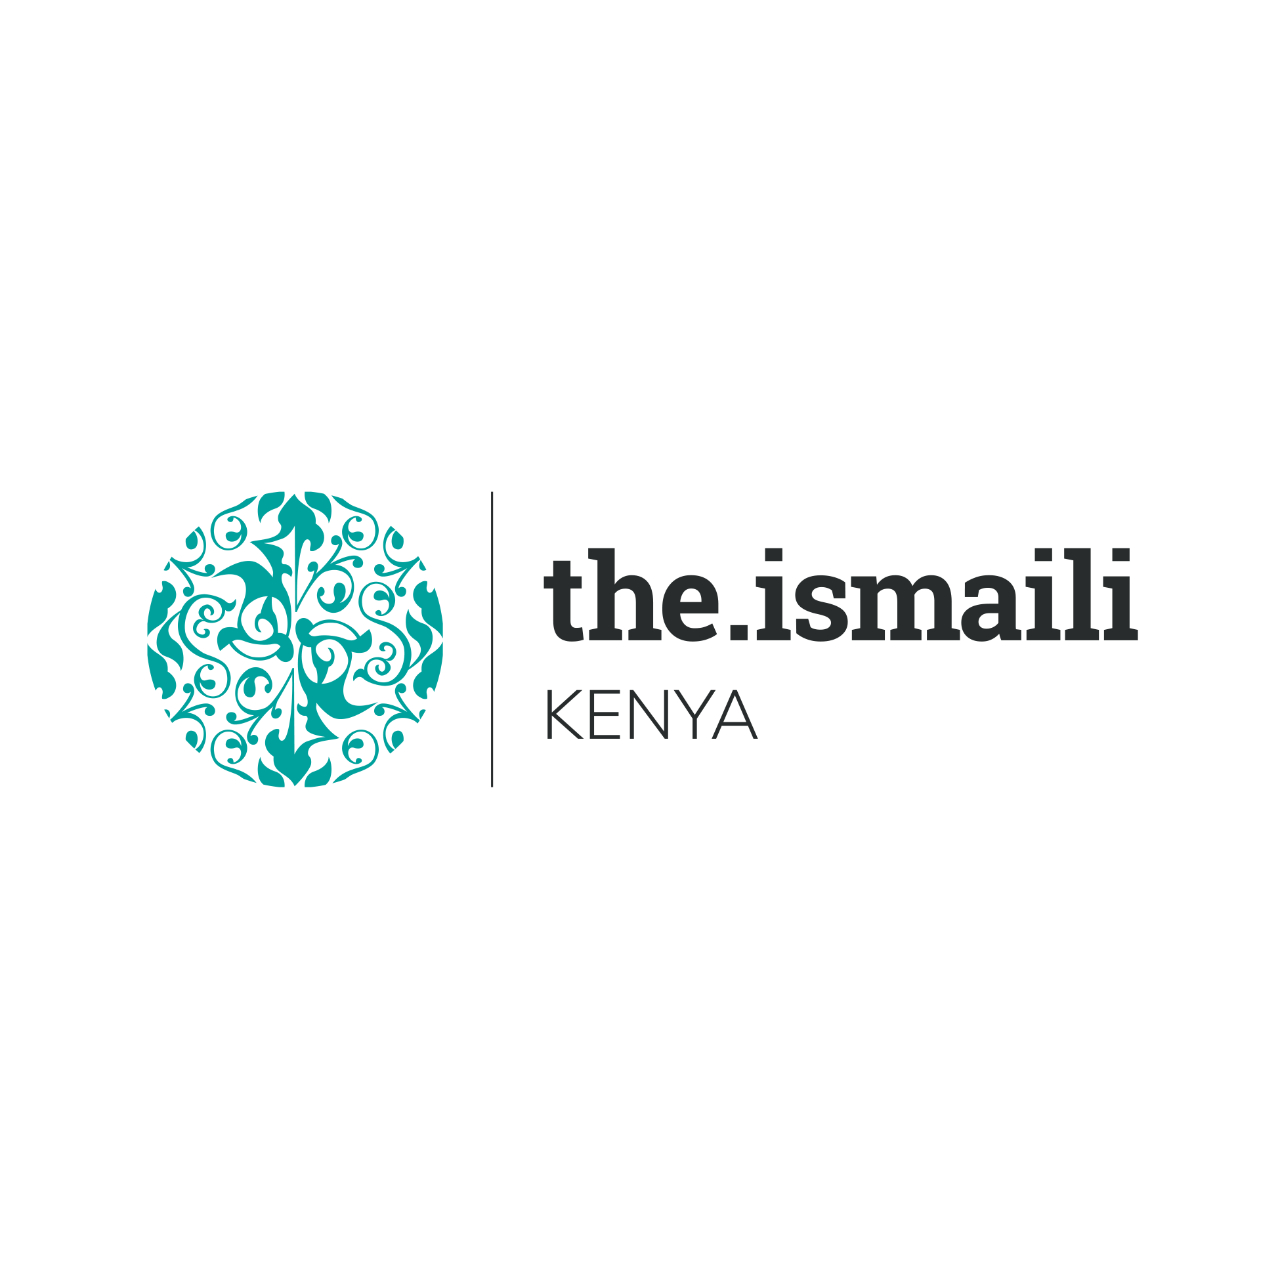 The Ismaili